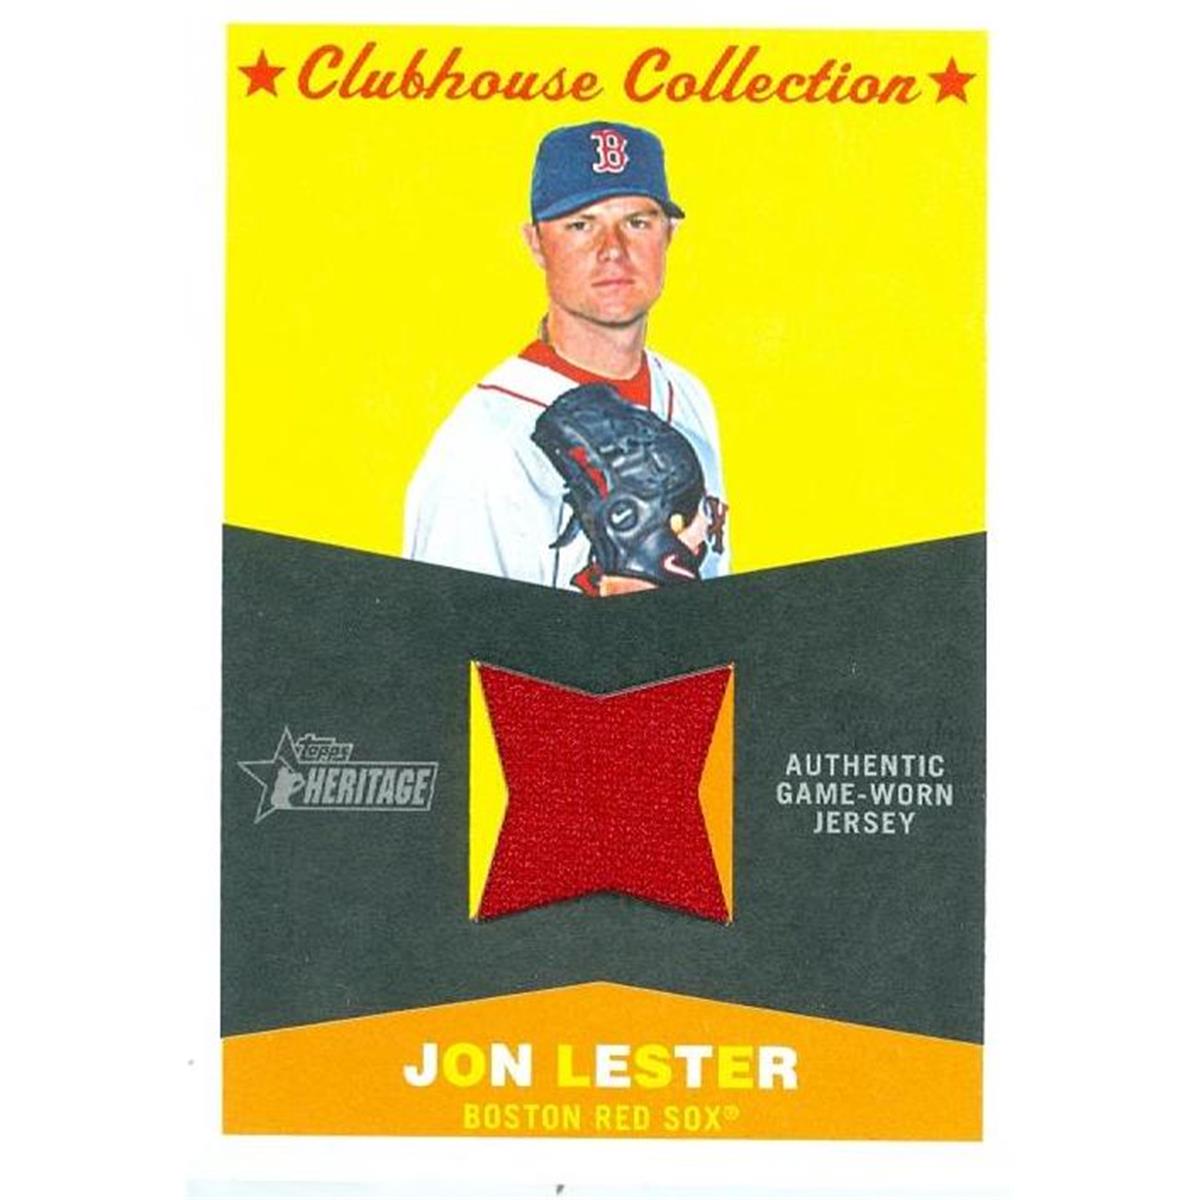 Autograph Warehouse 343594 Jon Lester Player Worn Jersey Patch Baseball Card - Boston Red Sox 2009 Topps Heritage No. CC-JL